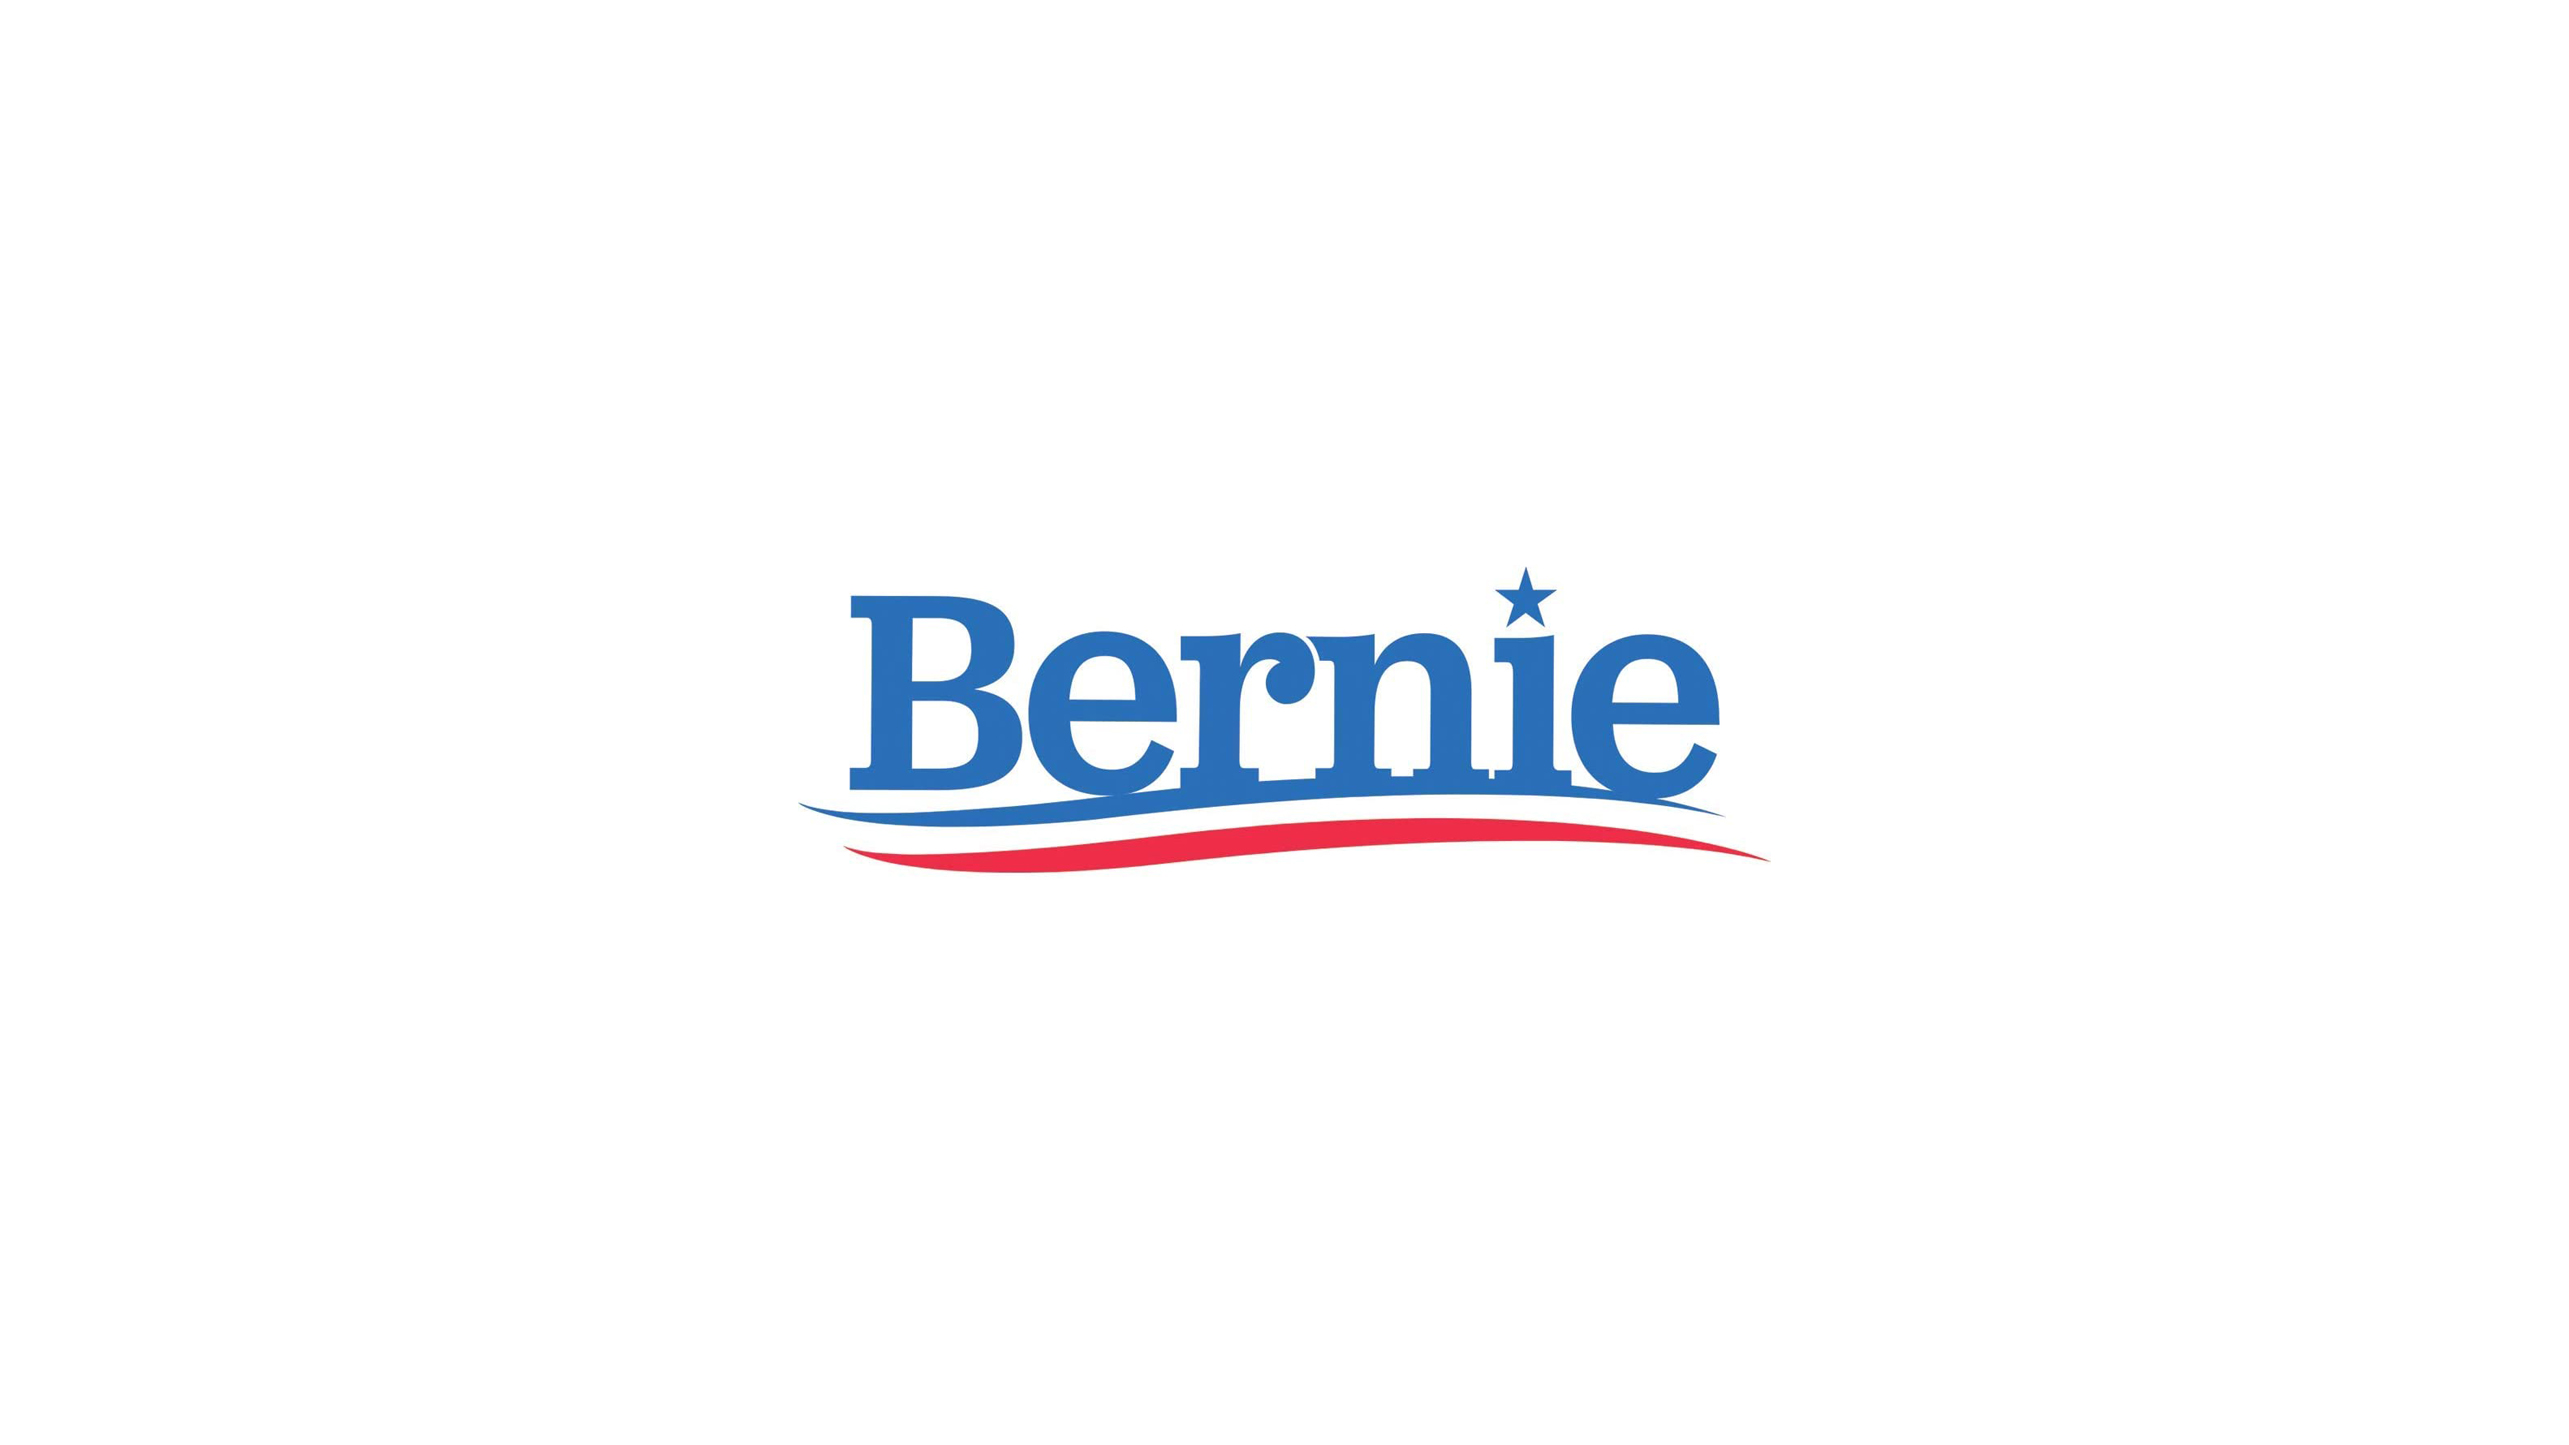 Bernie Sanders Politics 2569x1445